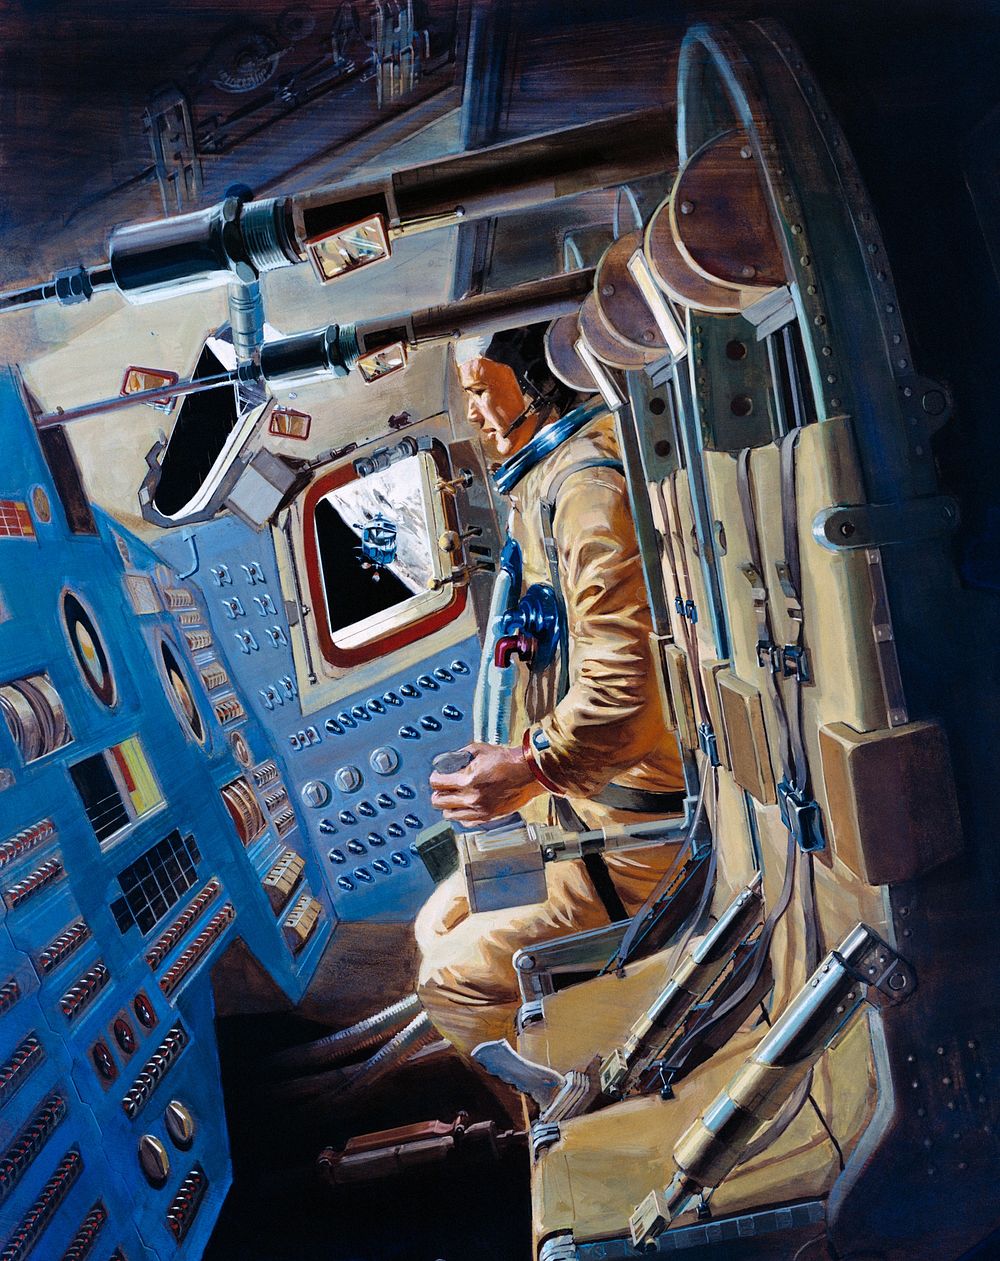 S69-58005 (10 Nov. 1969) --- An artist's concept of the Apollo 12 Command Module's (CM) interior, with the command module…